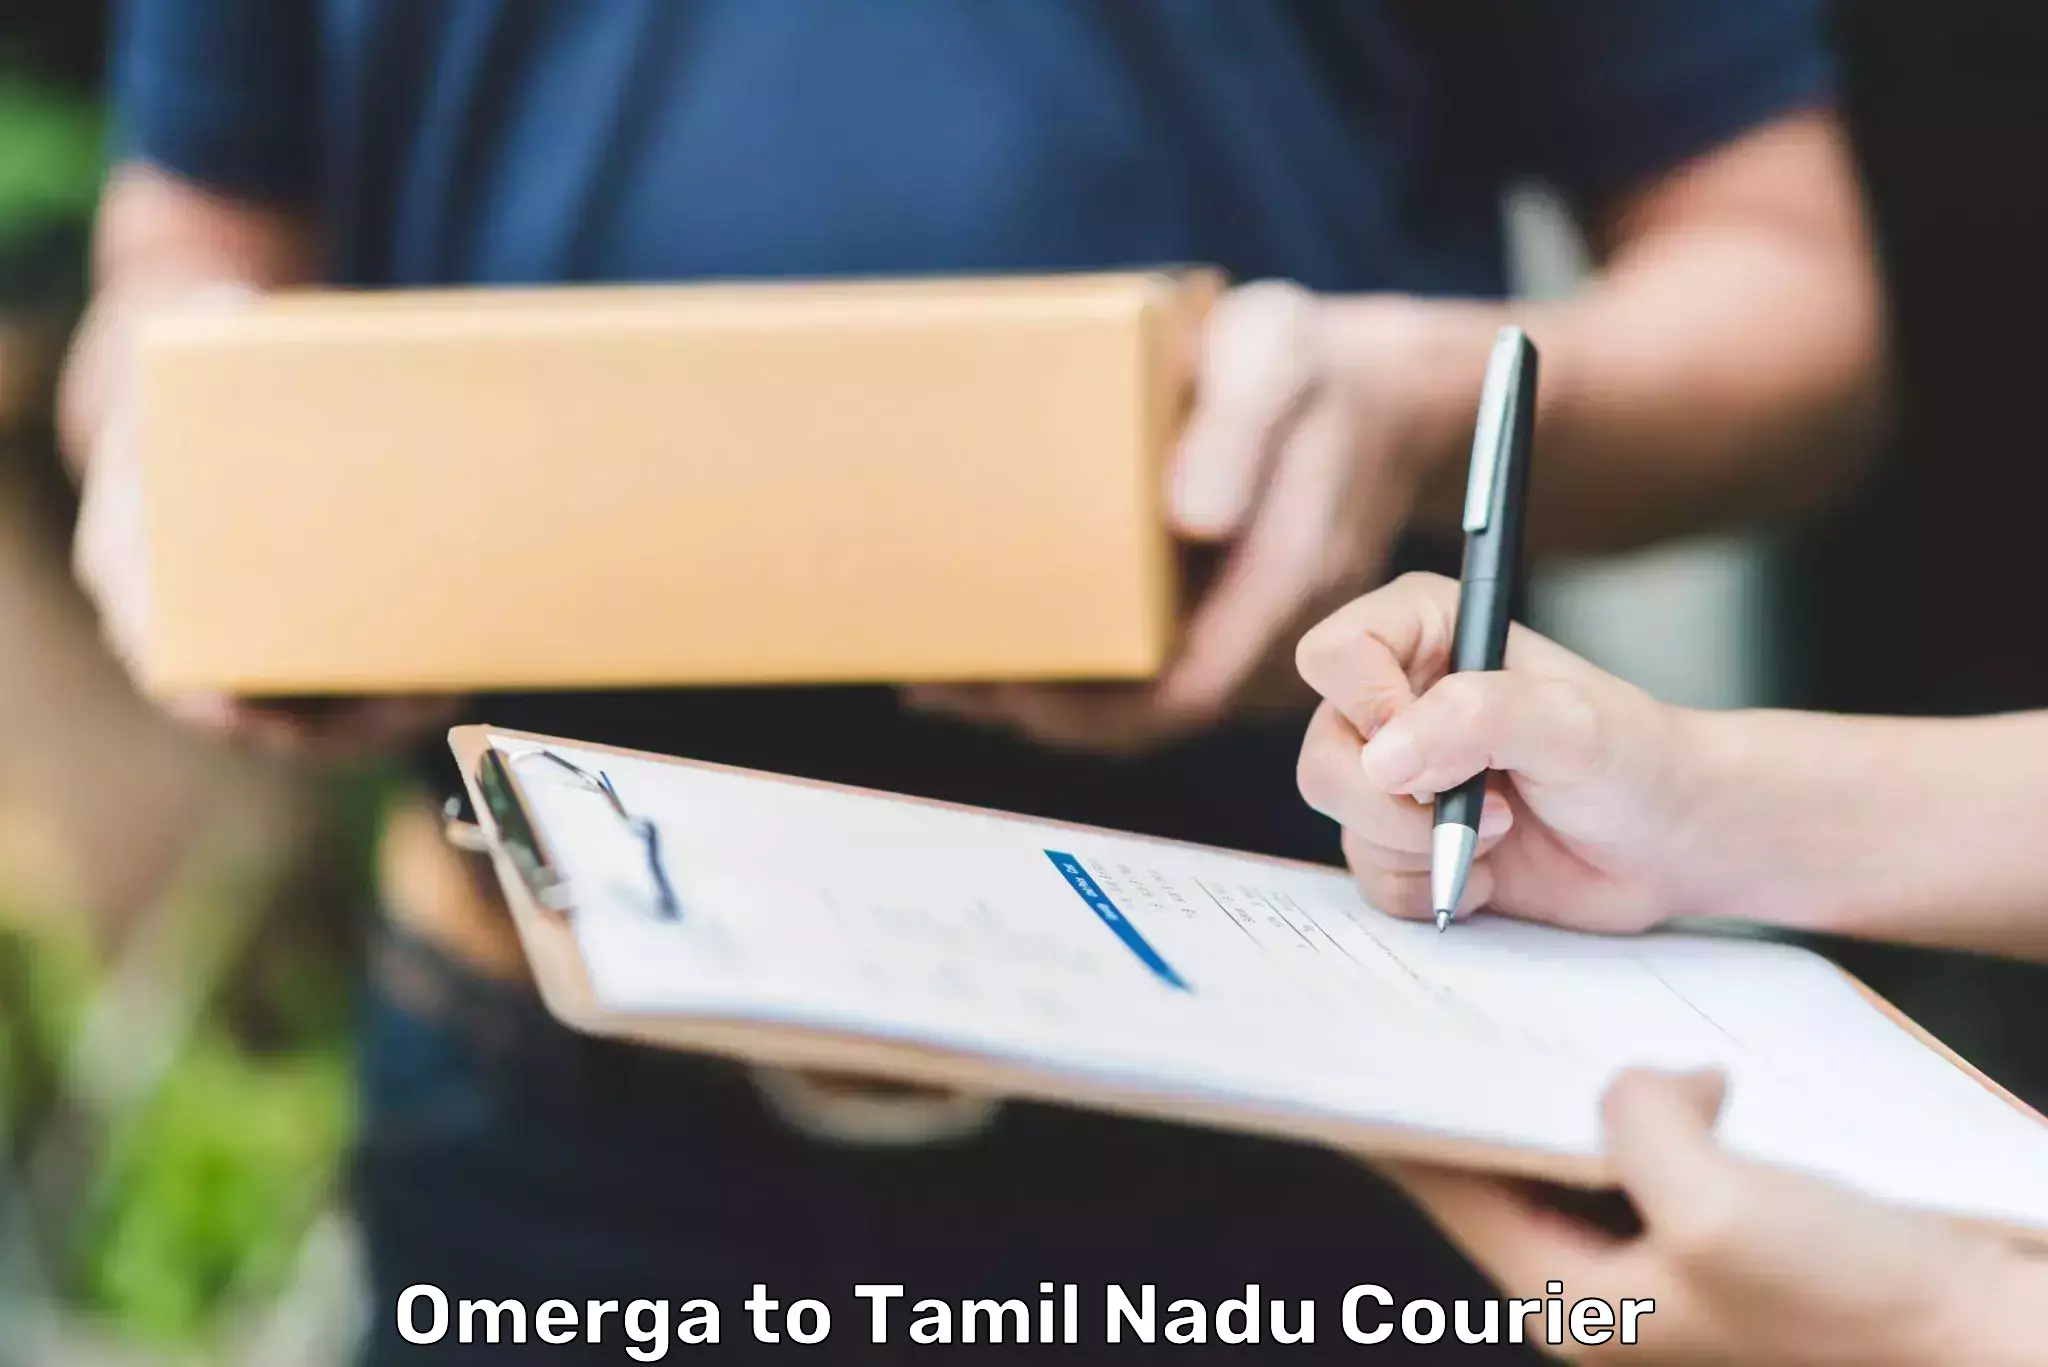 Quick parcel dispatch Omerga to Tamil Nadu